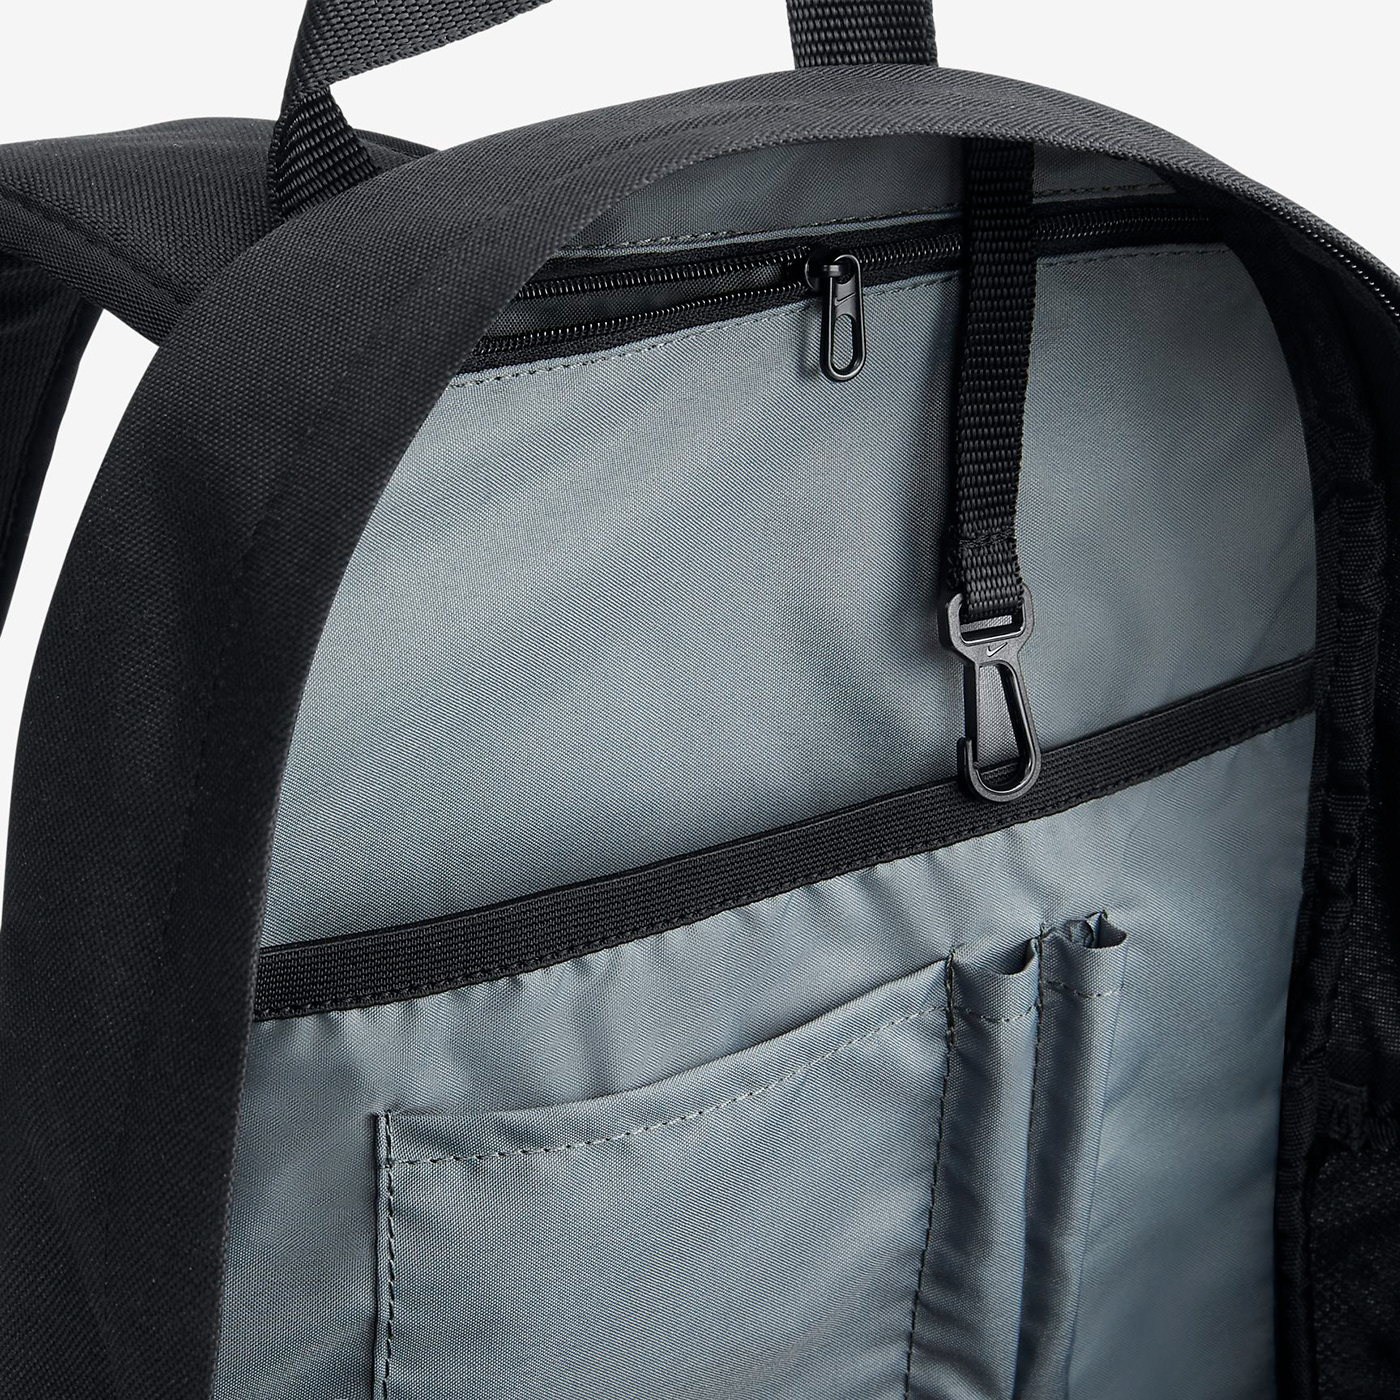 bag design soft goods soft goods design duffel backpack Nike Coated Material melange effect men's training